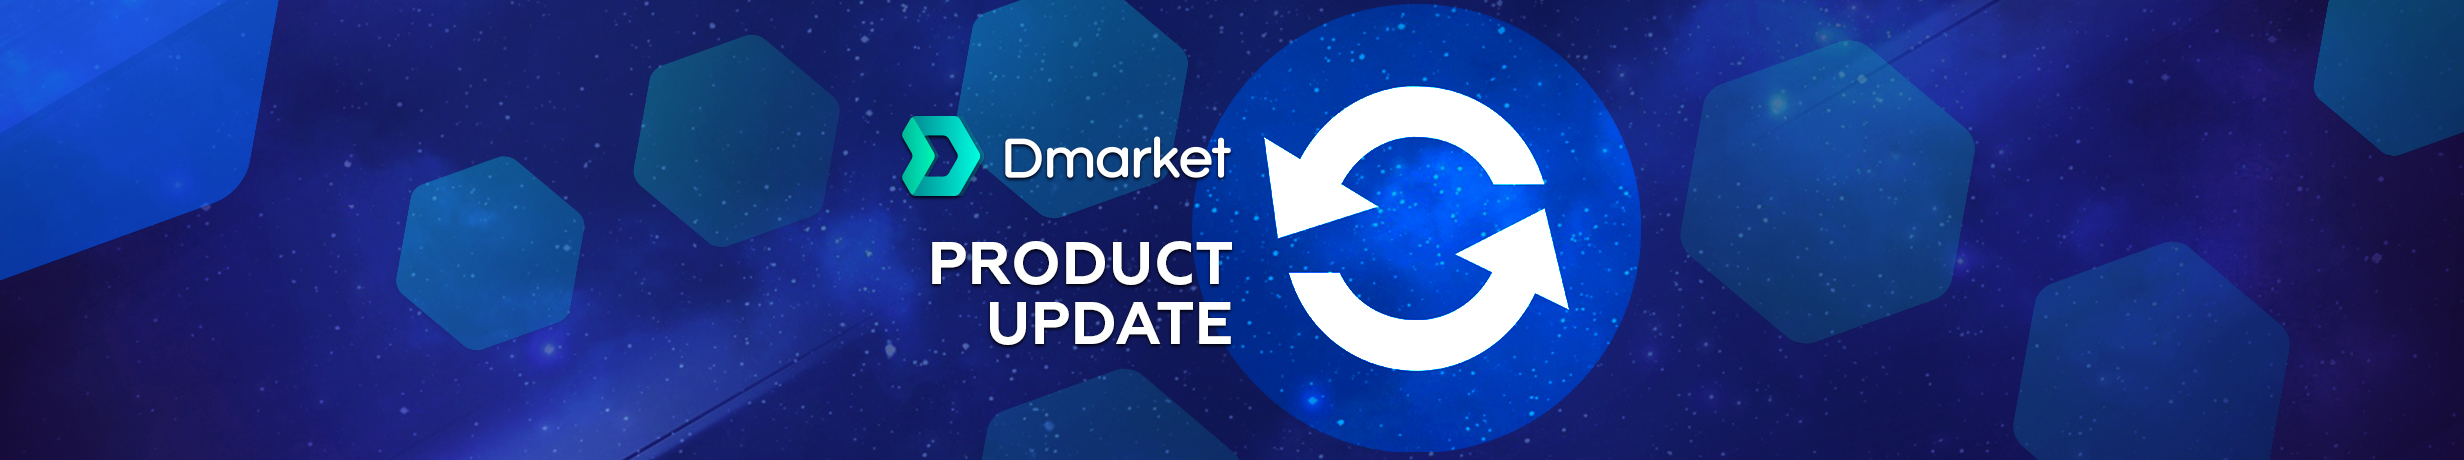 2018 Product Updates – DMarket Latest News